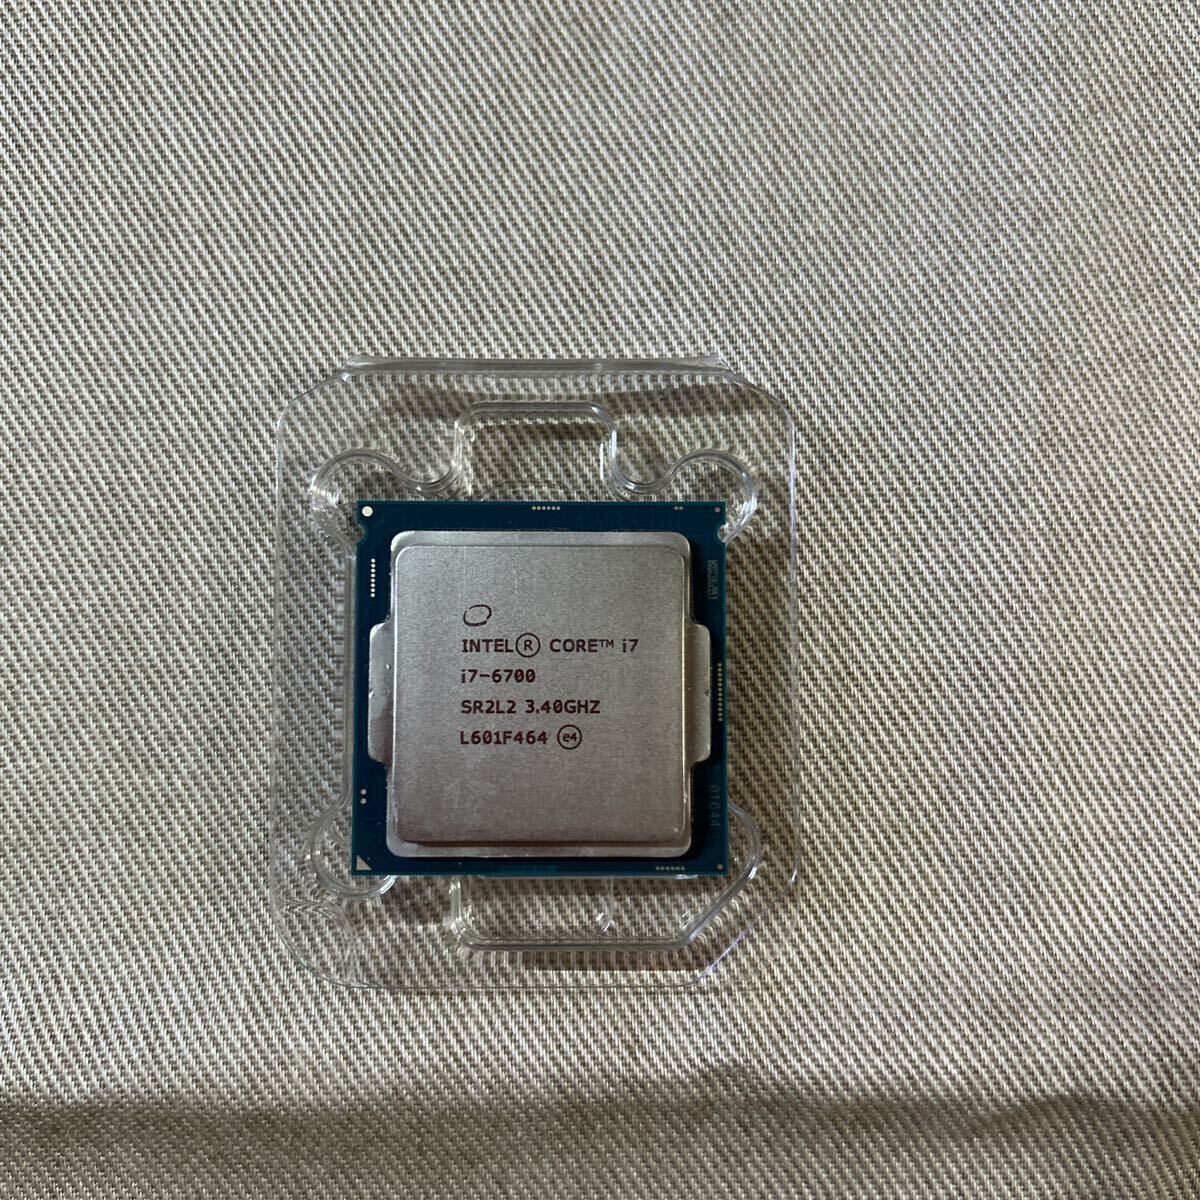  Intel Core i7 6700, Asrock H170 Pro4S motherboard,Team4GB DDR4 memory 4 sheets wireless LAN adaptor set junk 